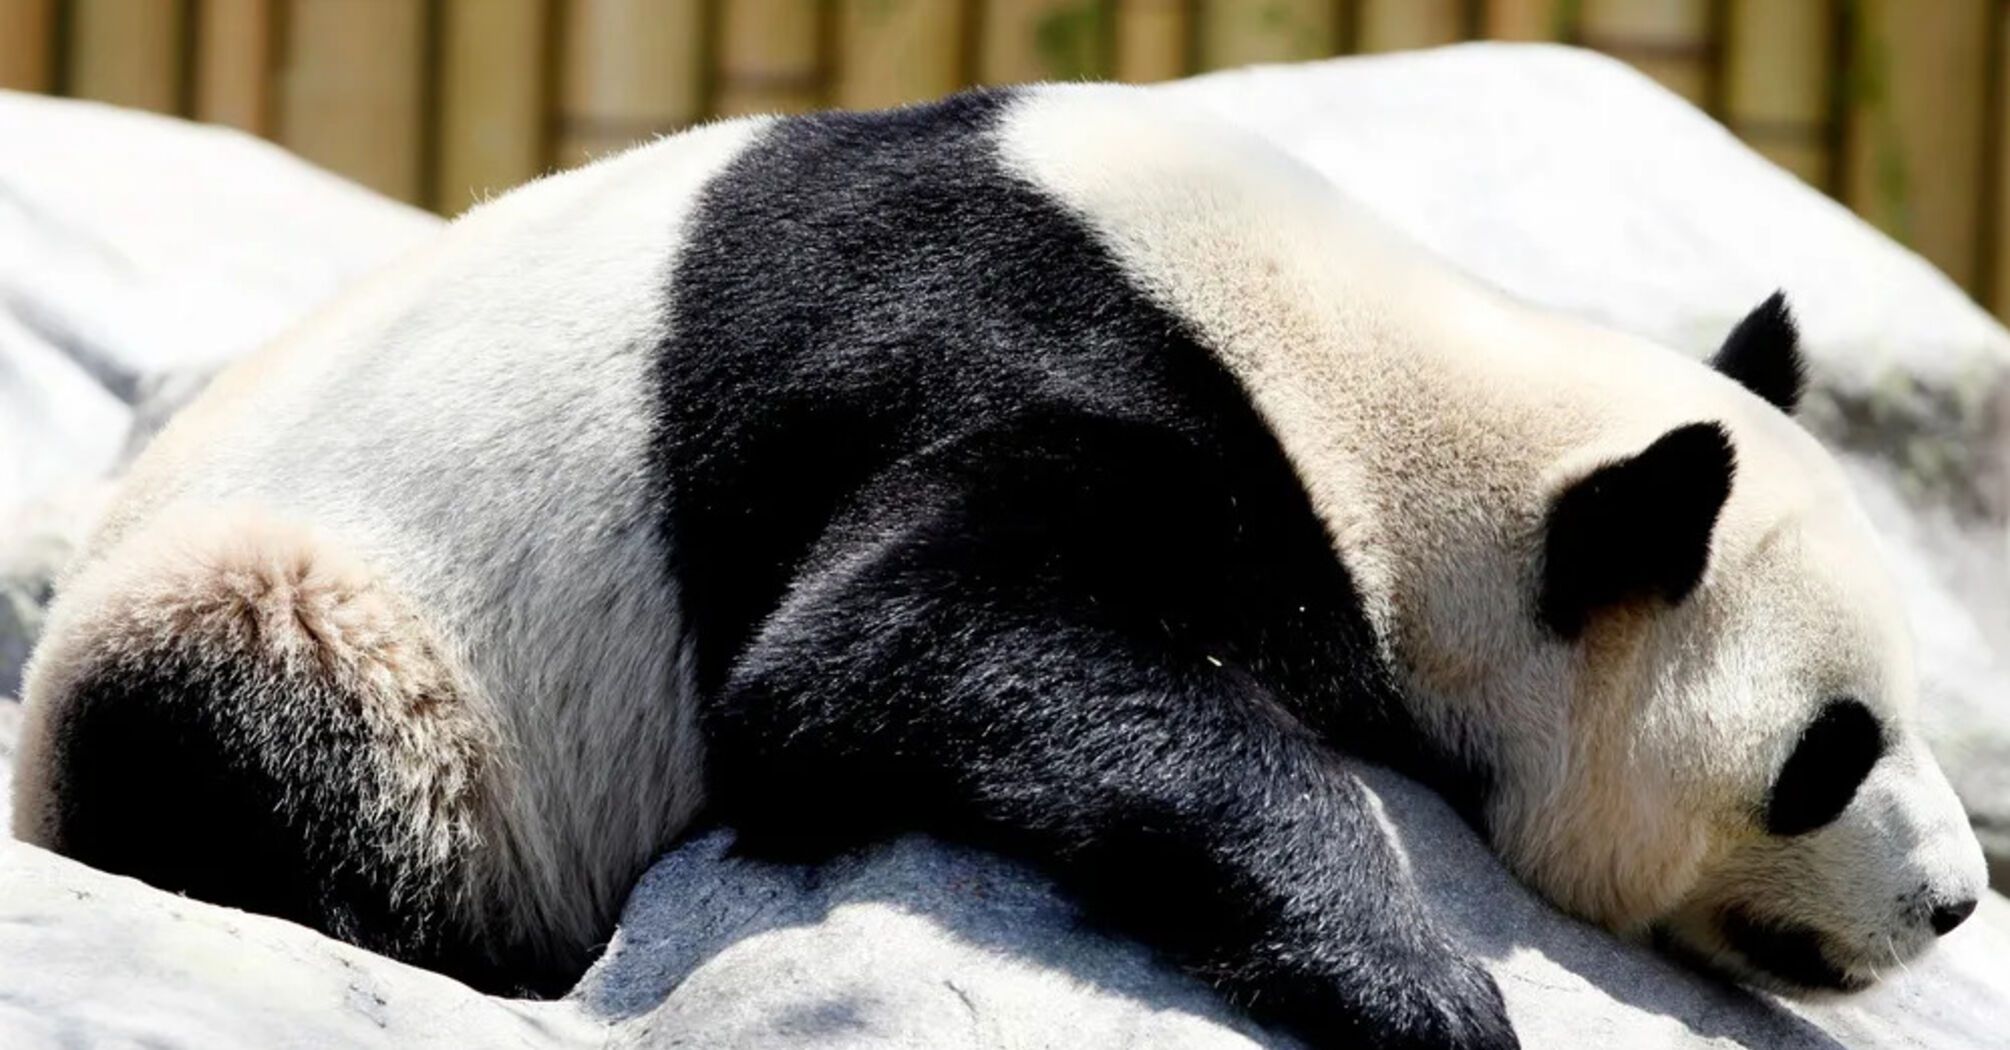 Giant pandas living in captivity suffer